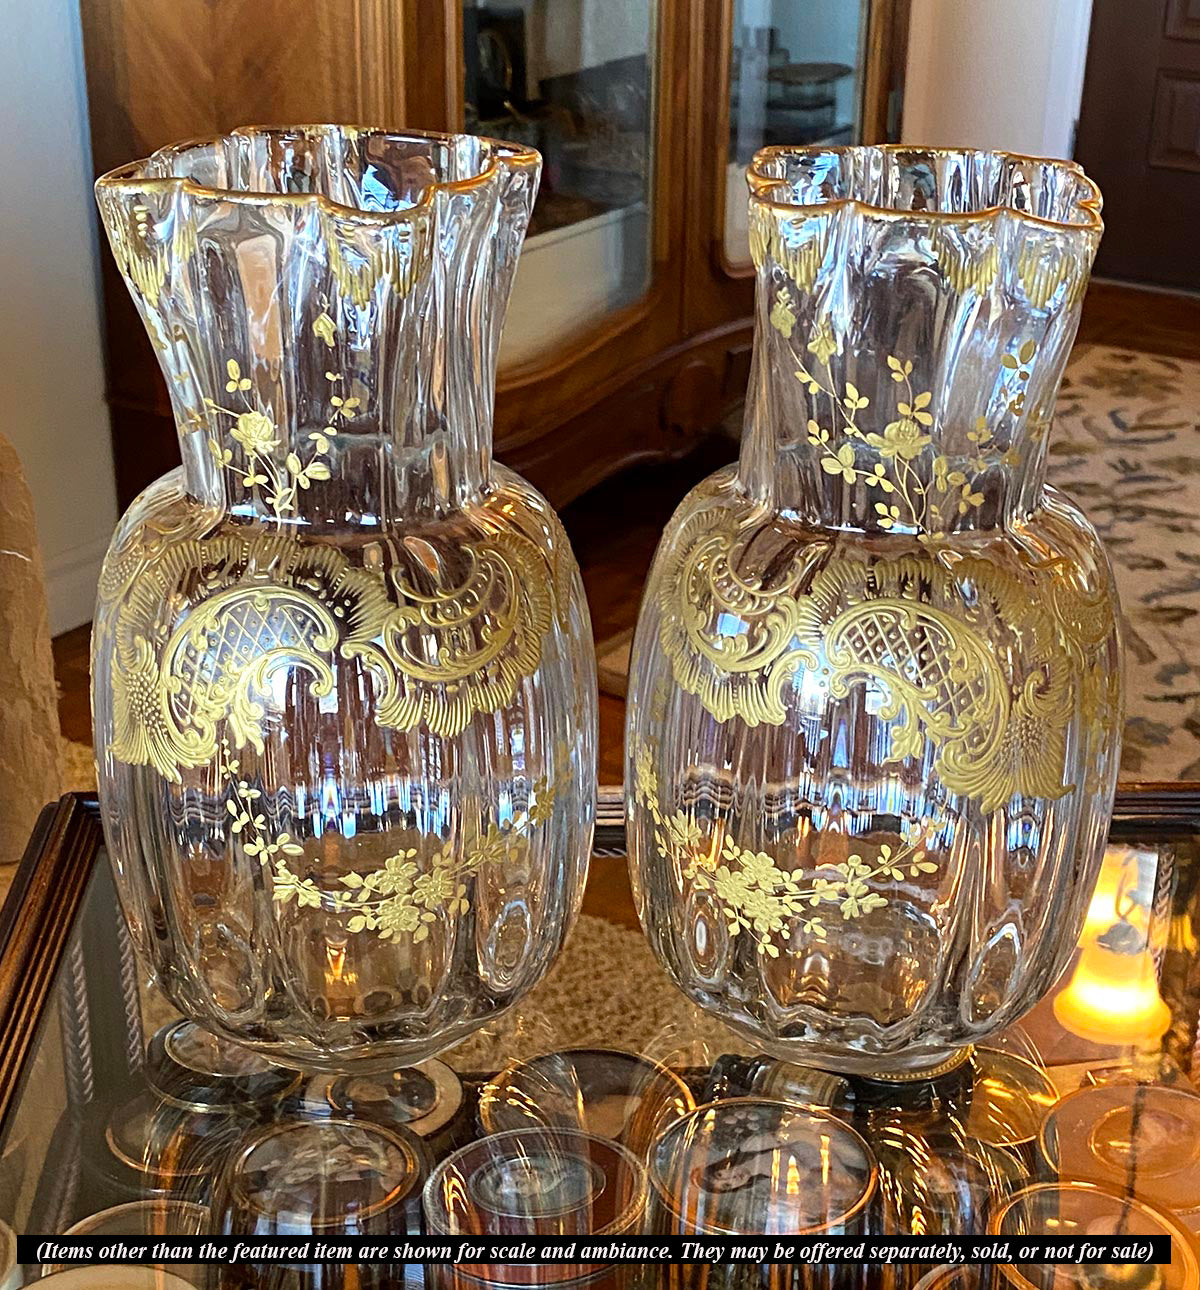 HUGE Pair of Matching Antique French Raised Gold Enamel Baccarat or St Louis Mantel Vase Vases